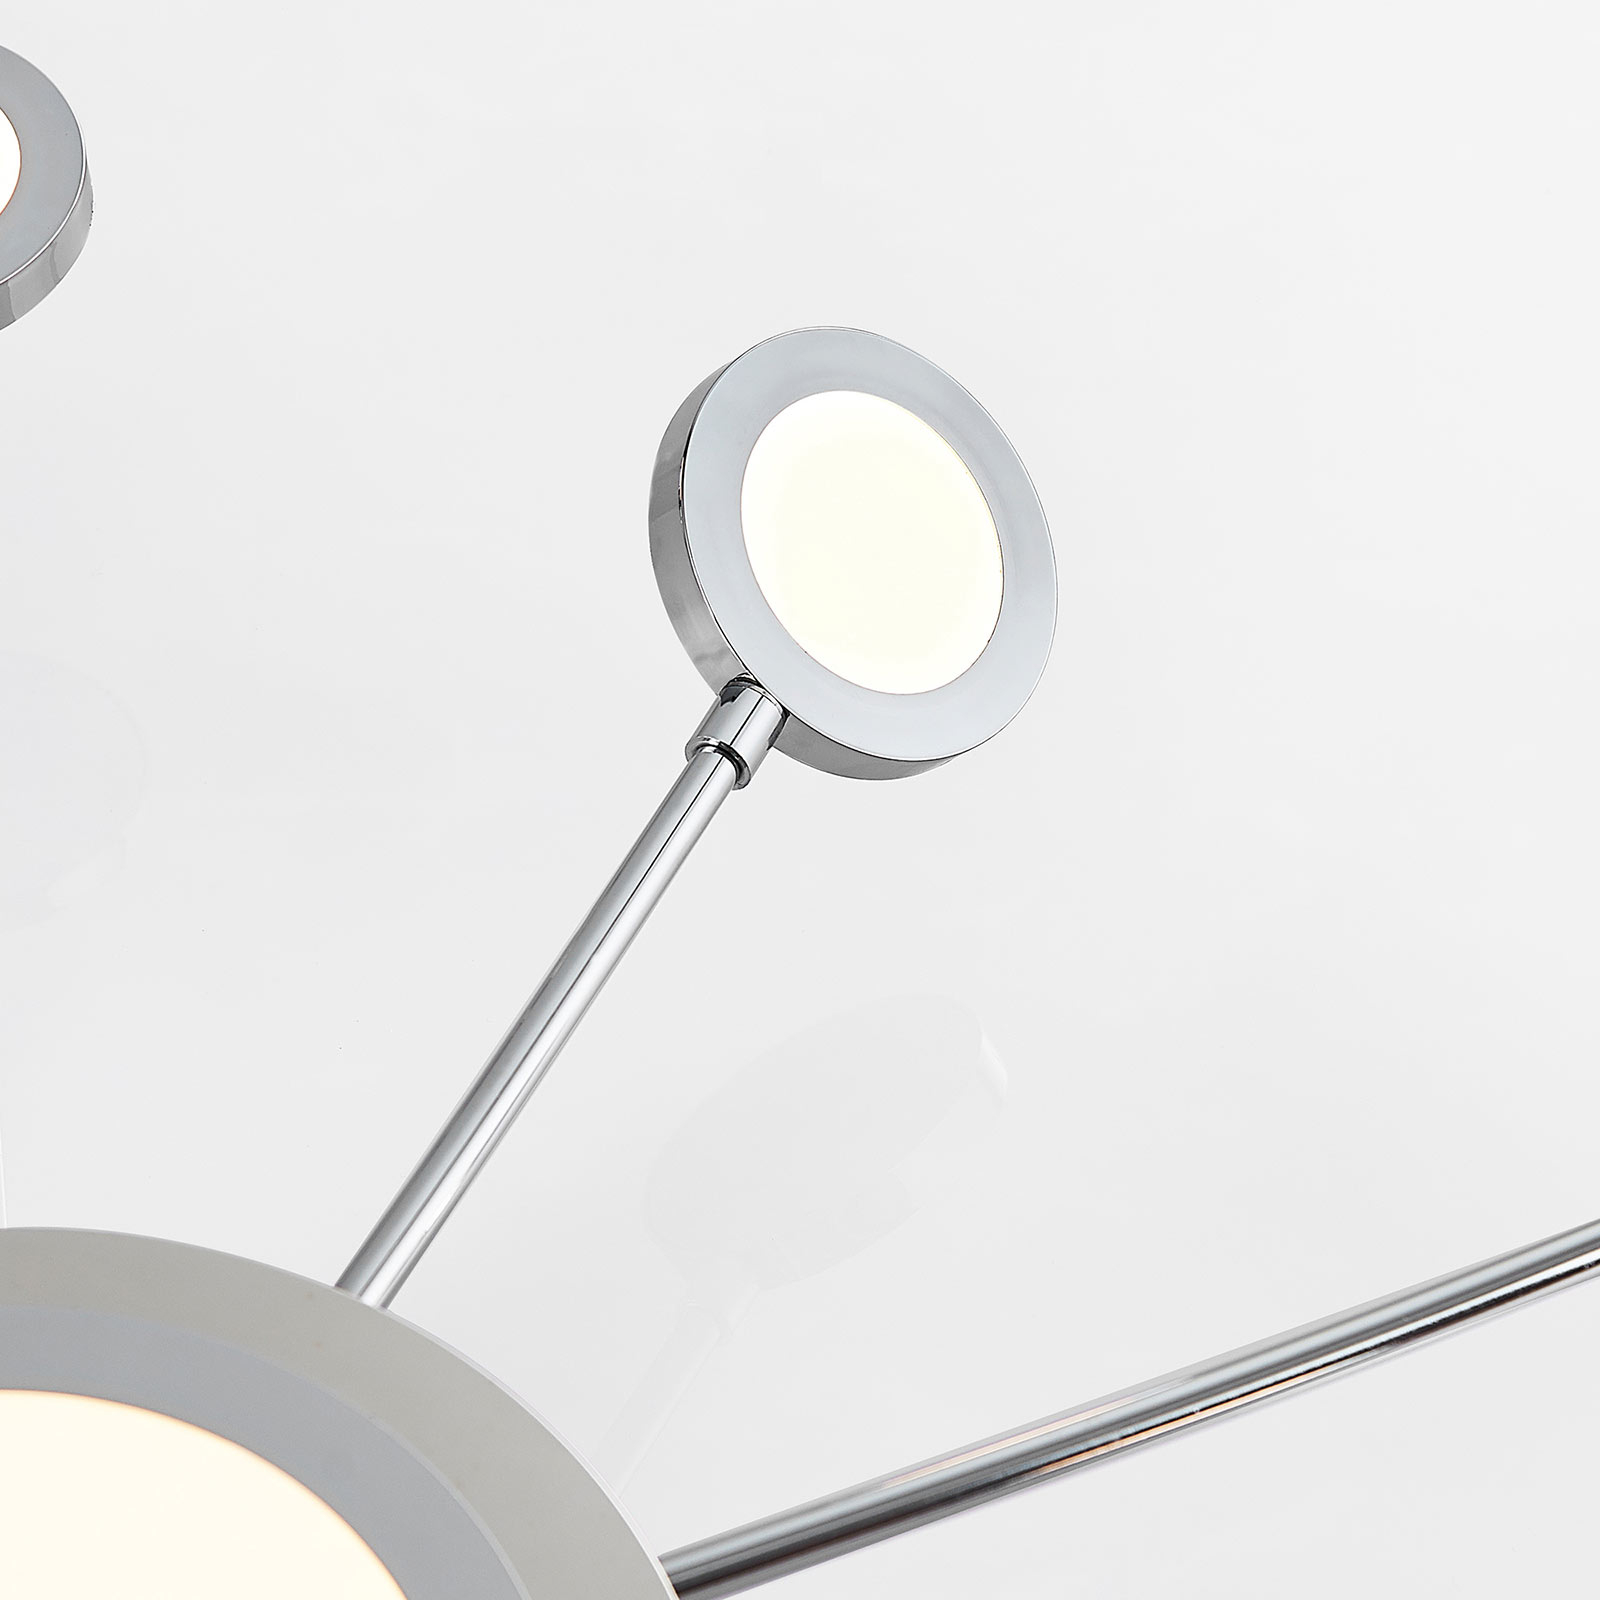 Chrome-plated Meru LED ceiling light, CCT